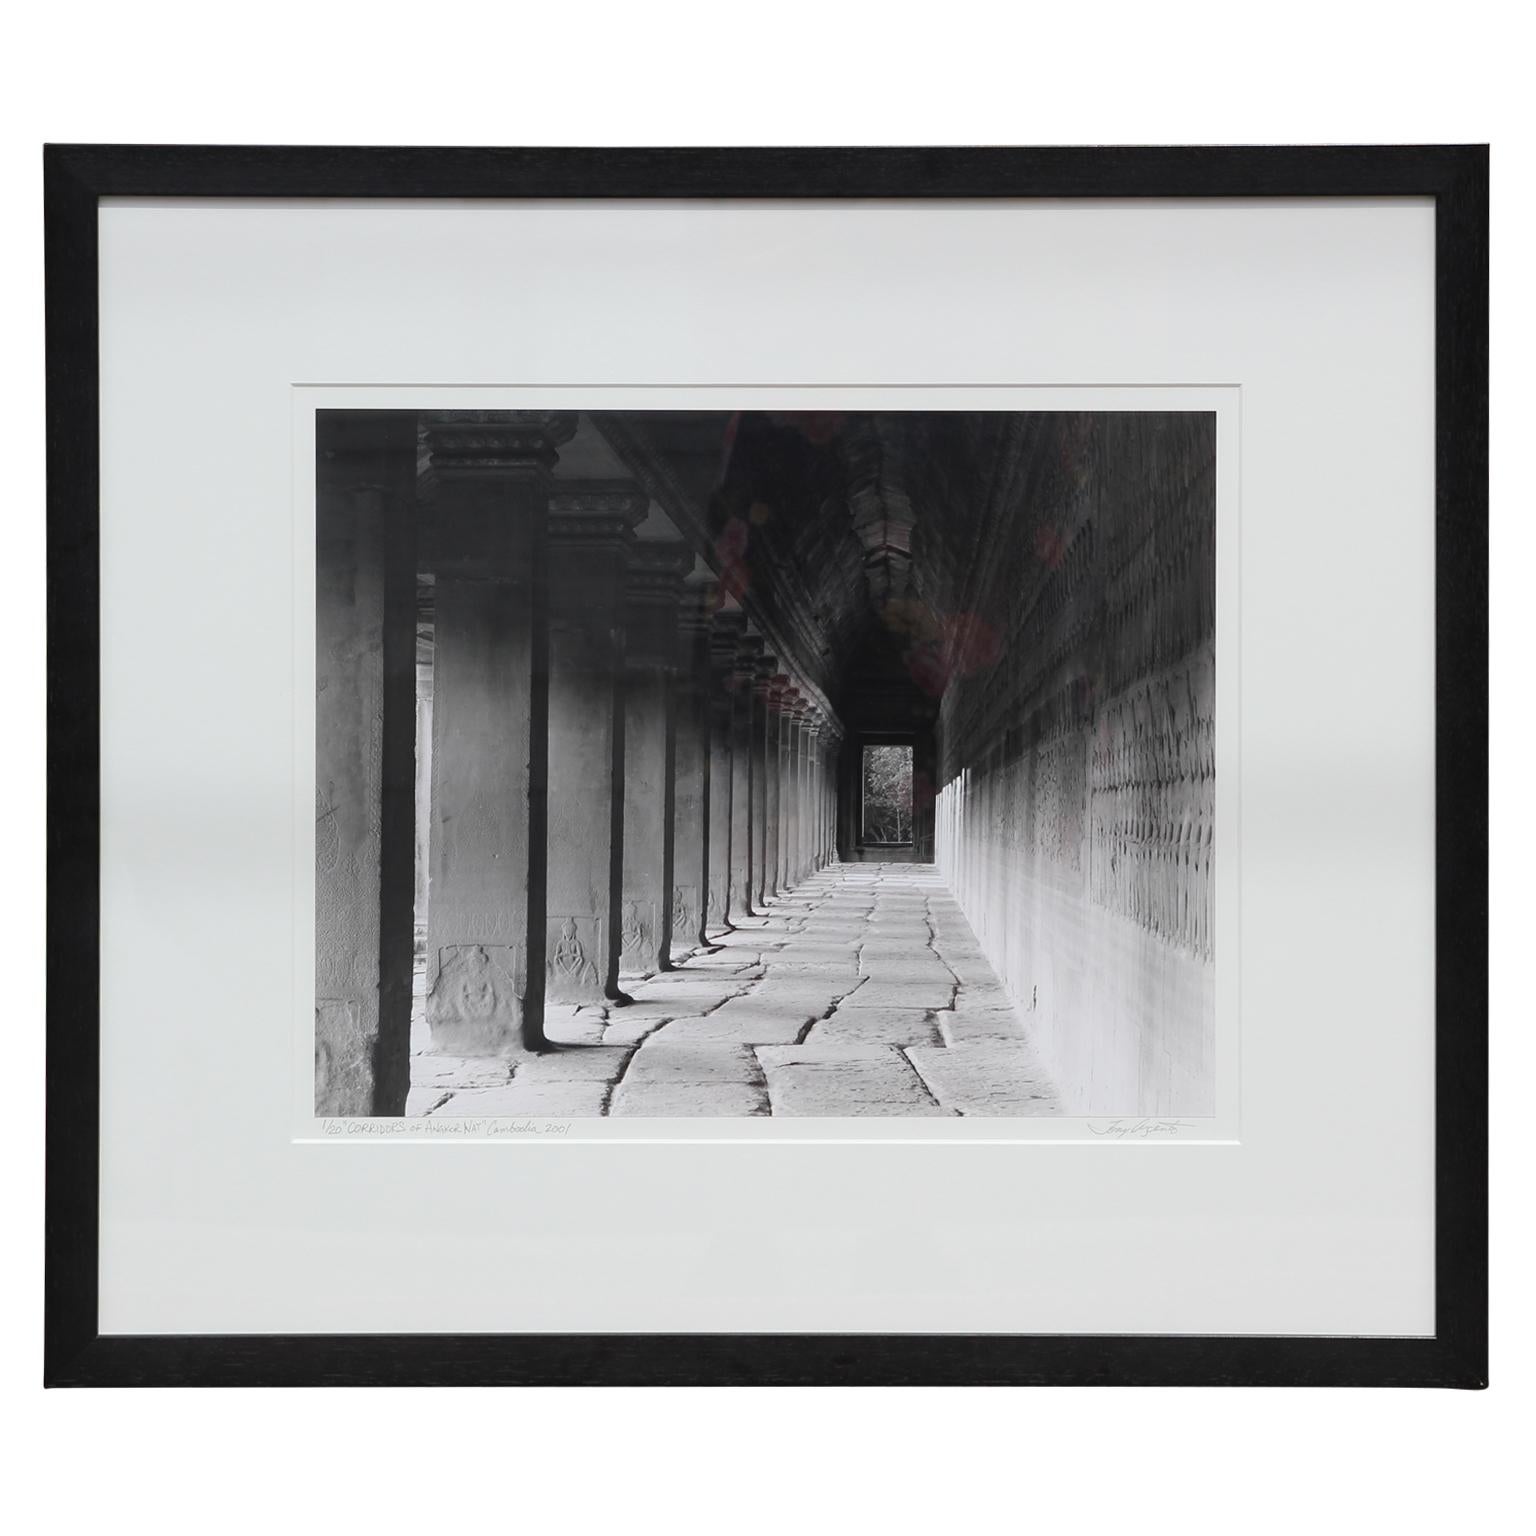 Black and White Photograph Tony Argento - « Corridors of Angkor Wat » - Angkor Wat, Cambodge - Photographie en noir et blanc